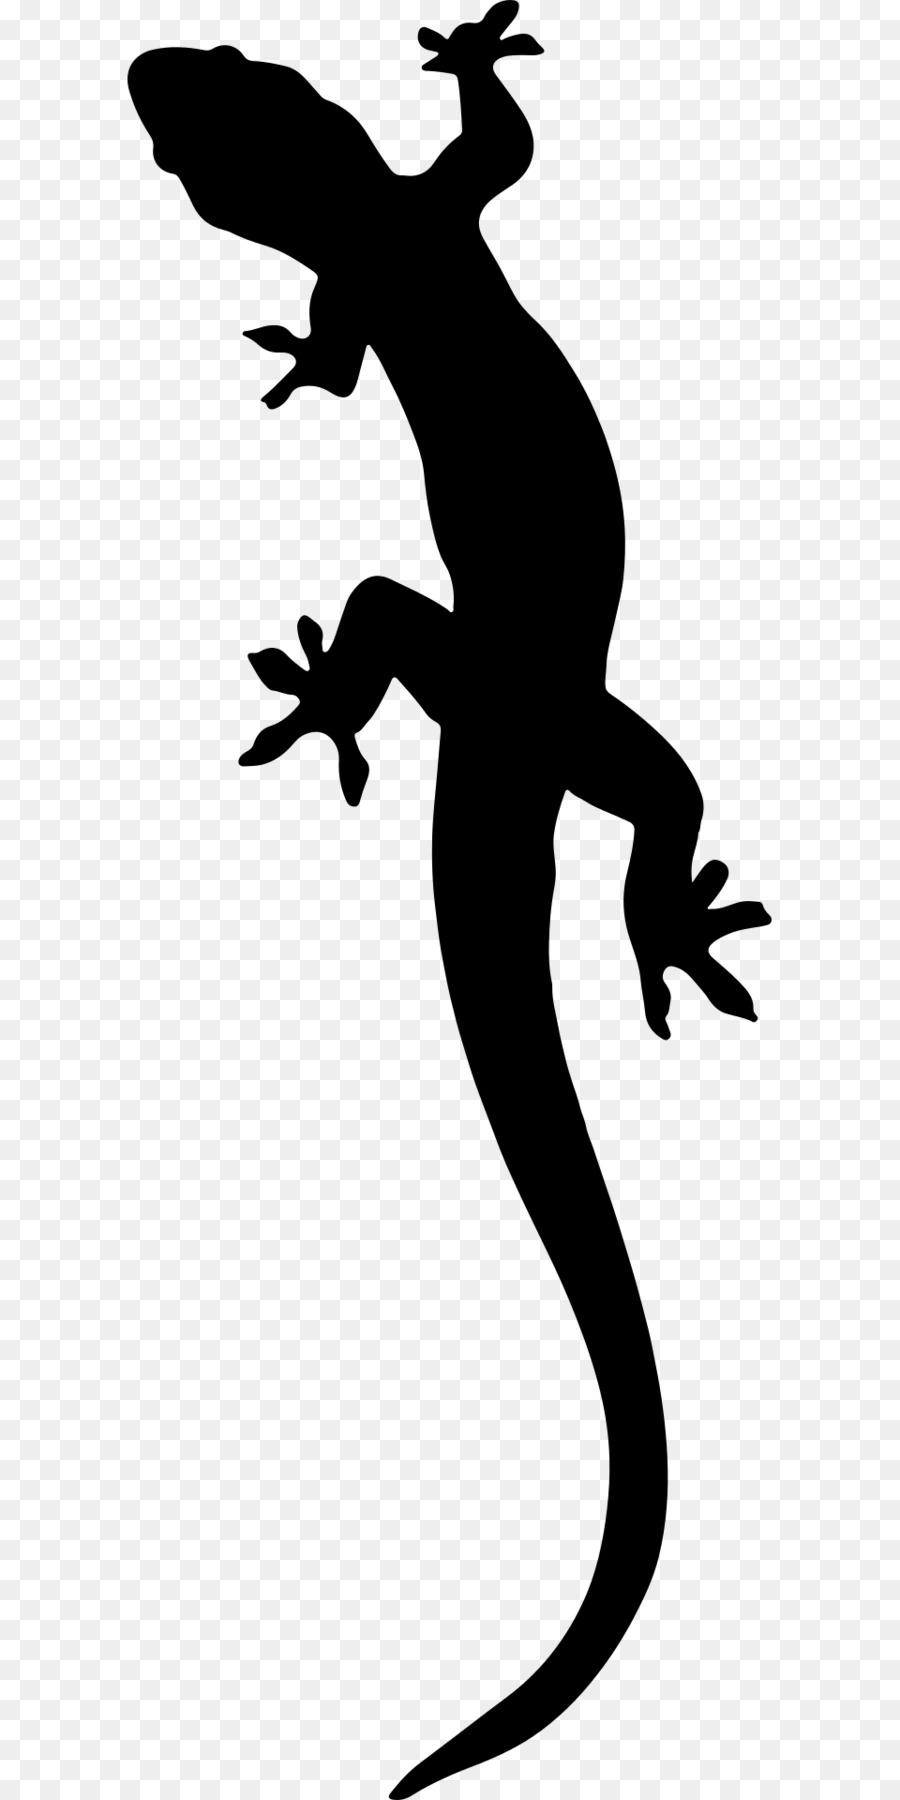 Salamander Eidechse Clip-art - Salamander